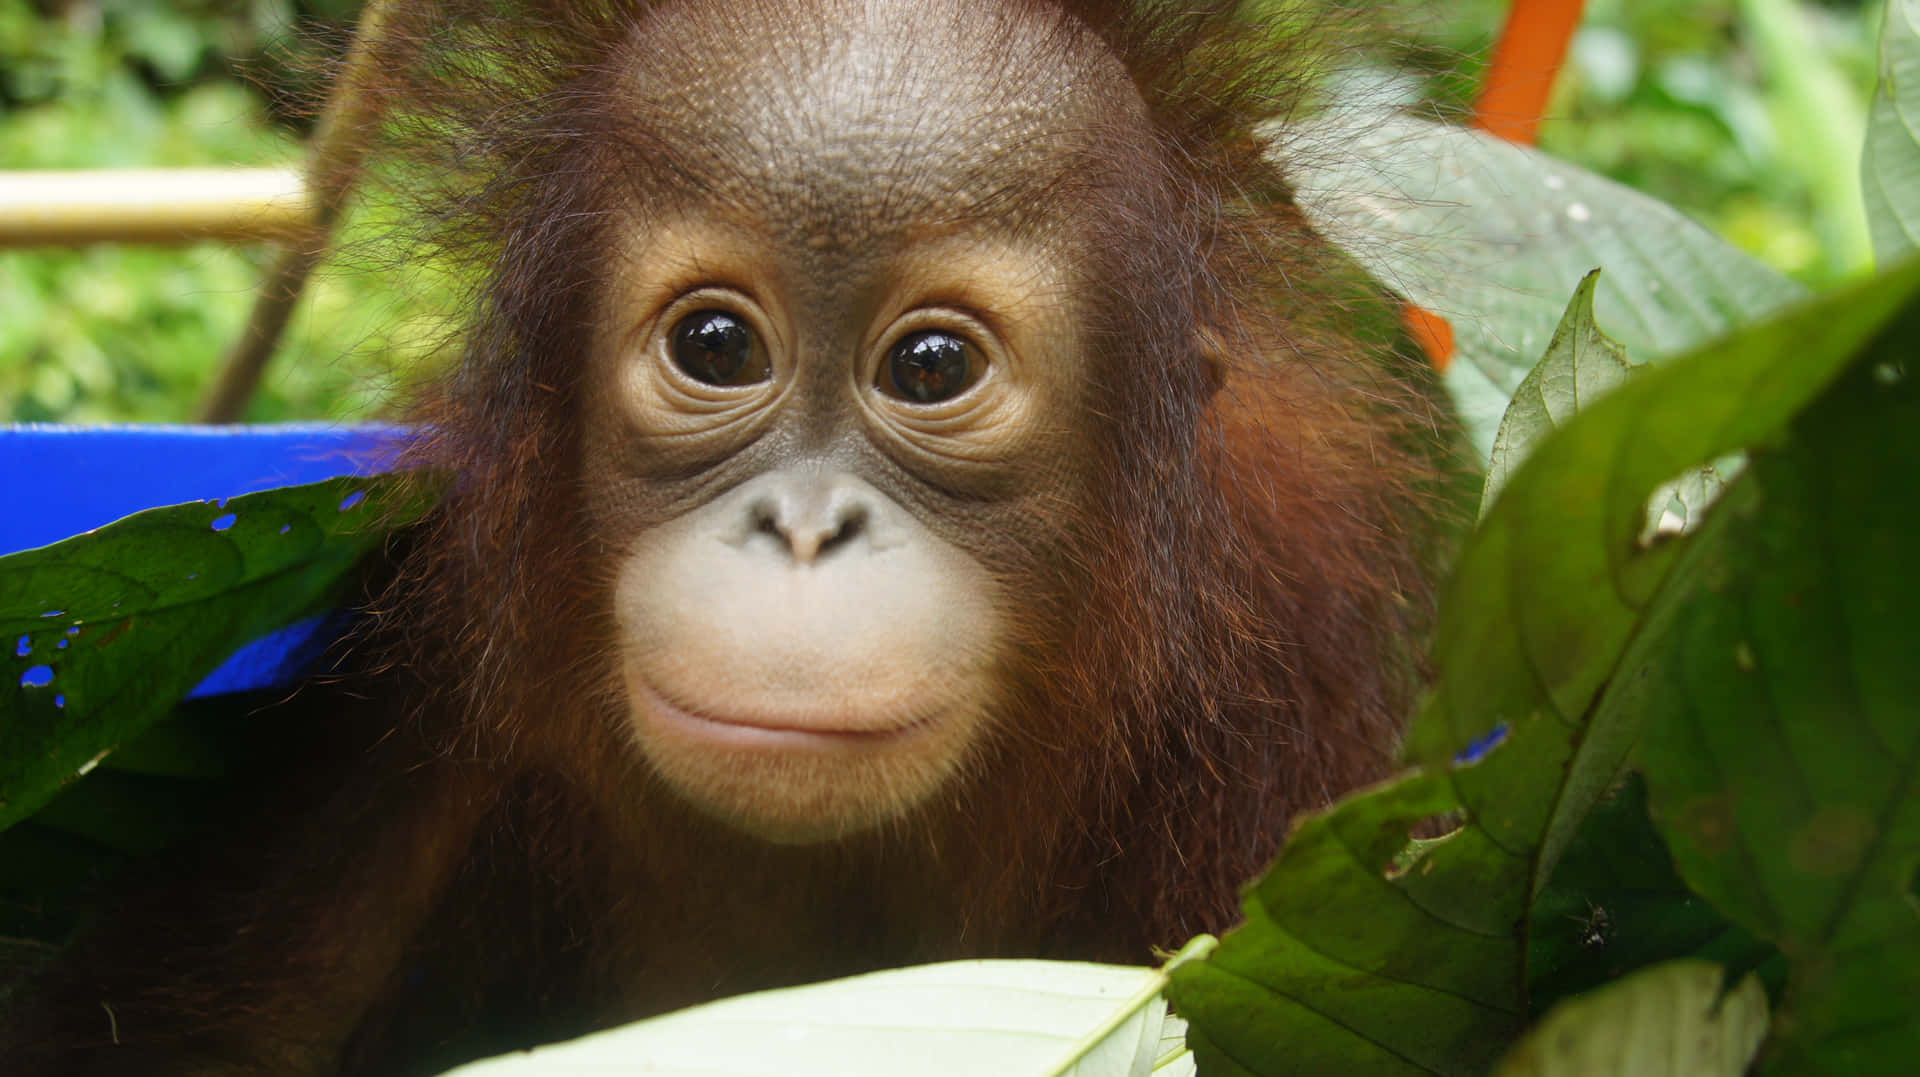 A Striking Portrait Of An Orangutan